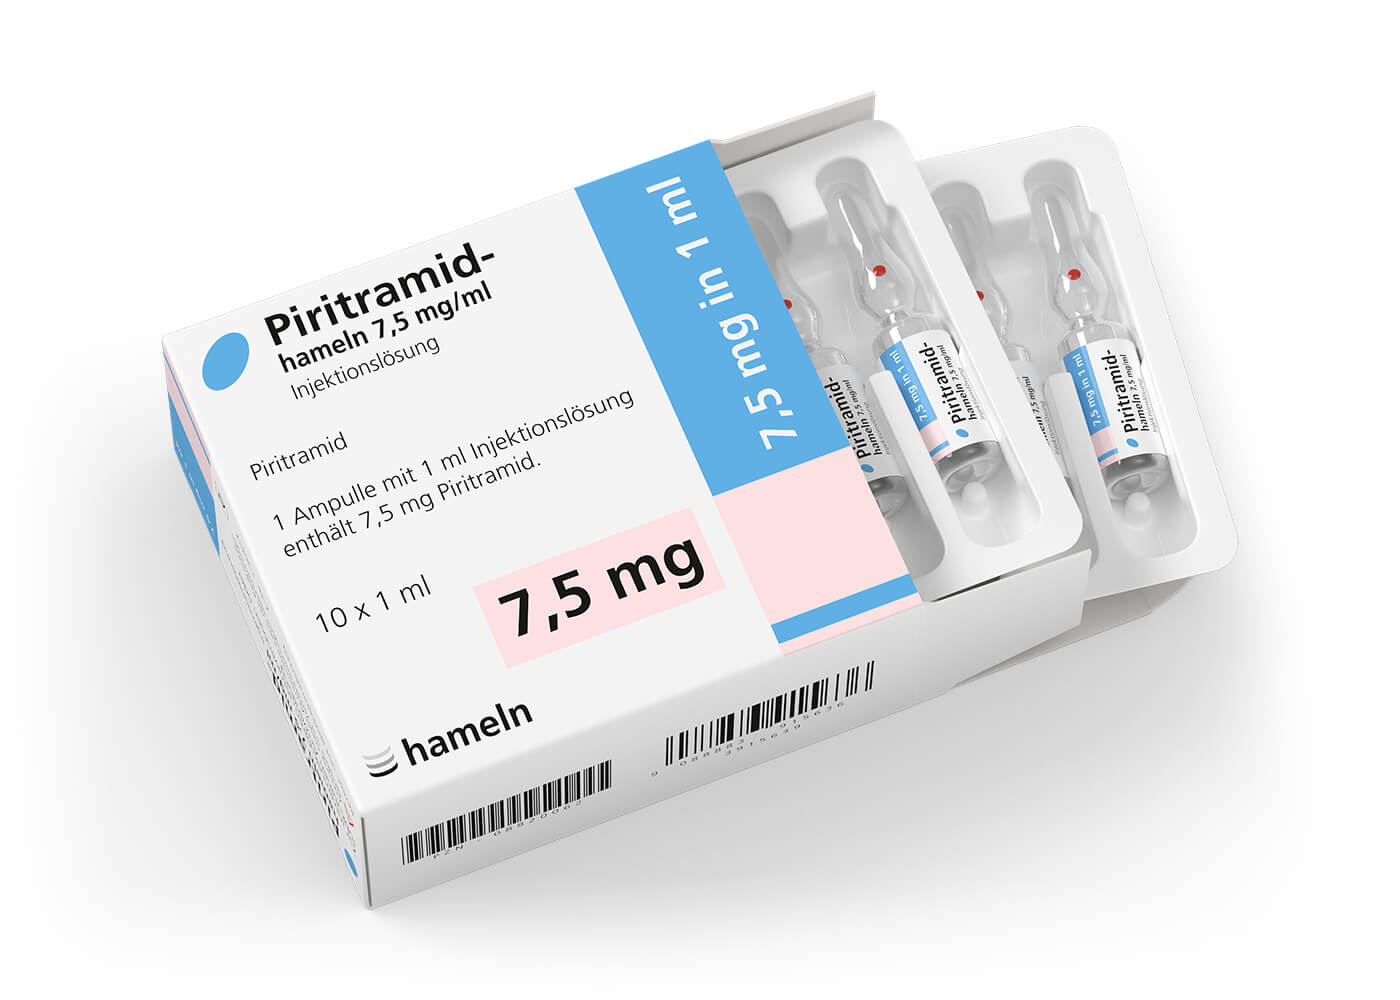 de-piritramid-7-5-mg-ml-7-5-mg-1-ml-993 - Hameln Pharma